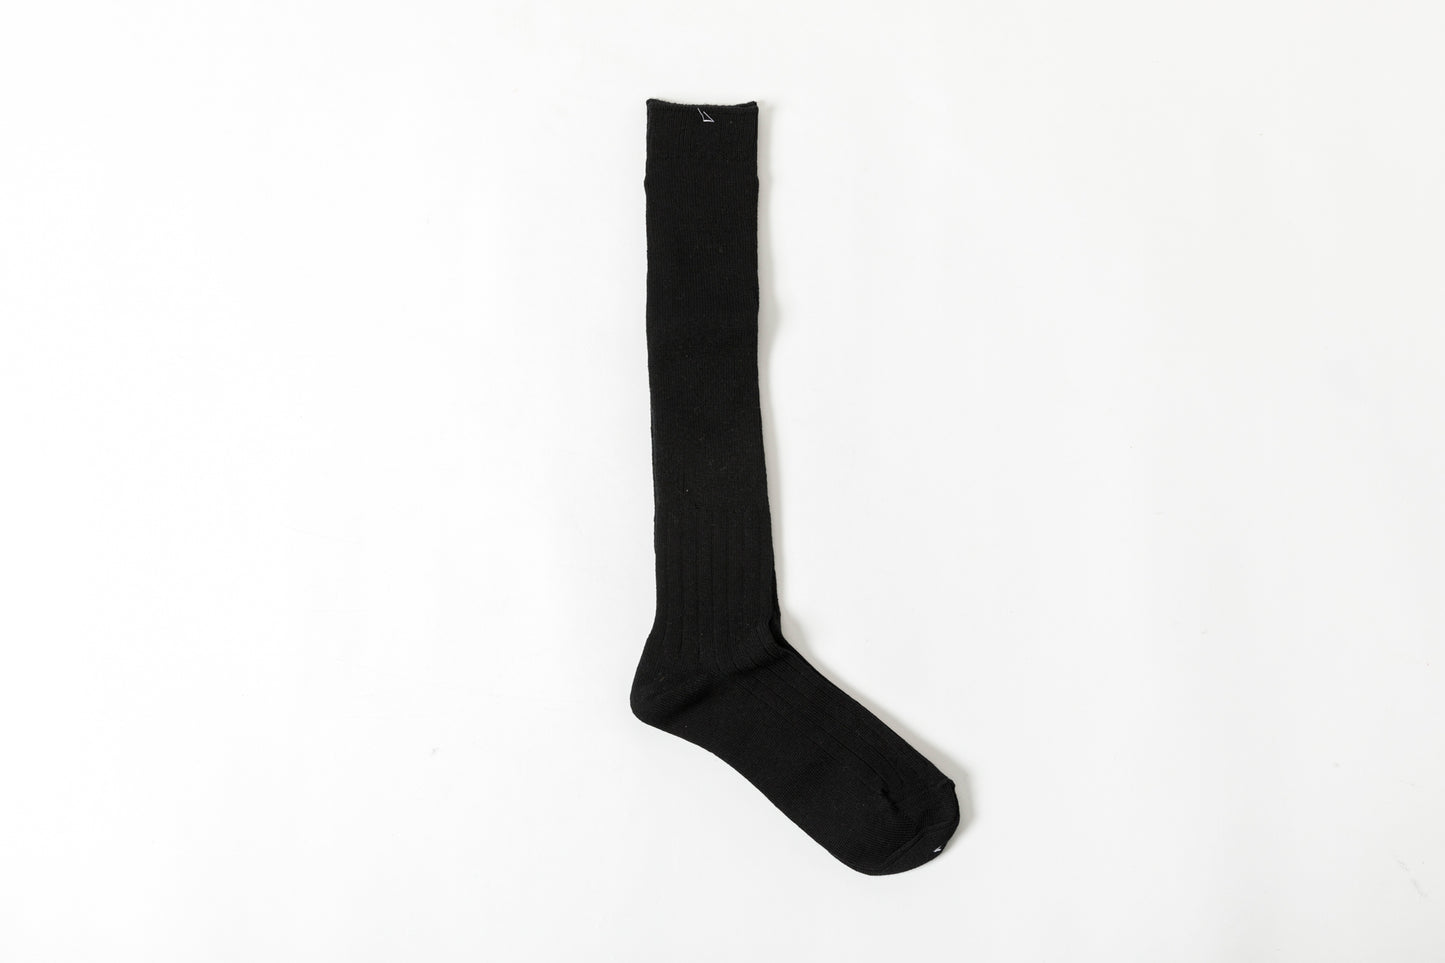 Willow Pants G-001 2P Socks BLK/PUR